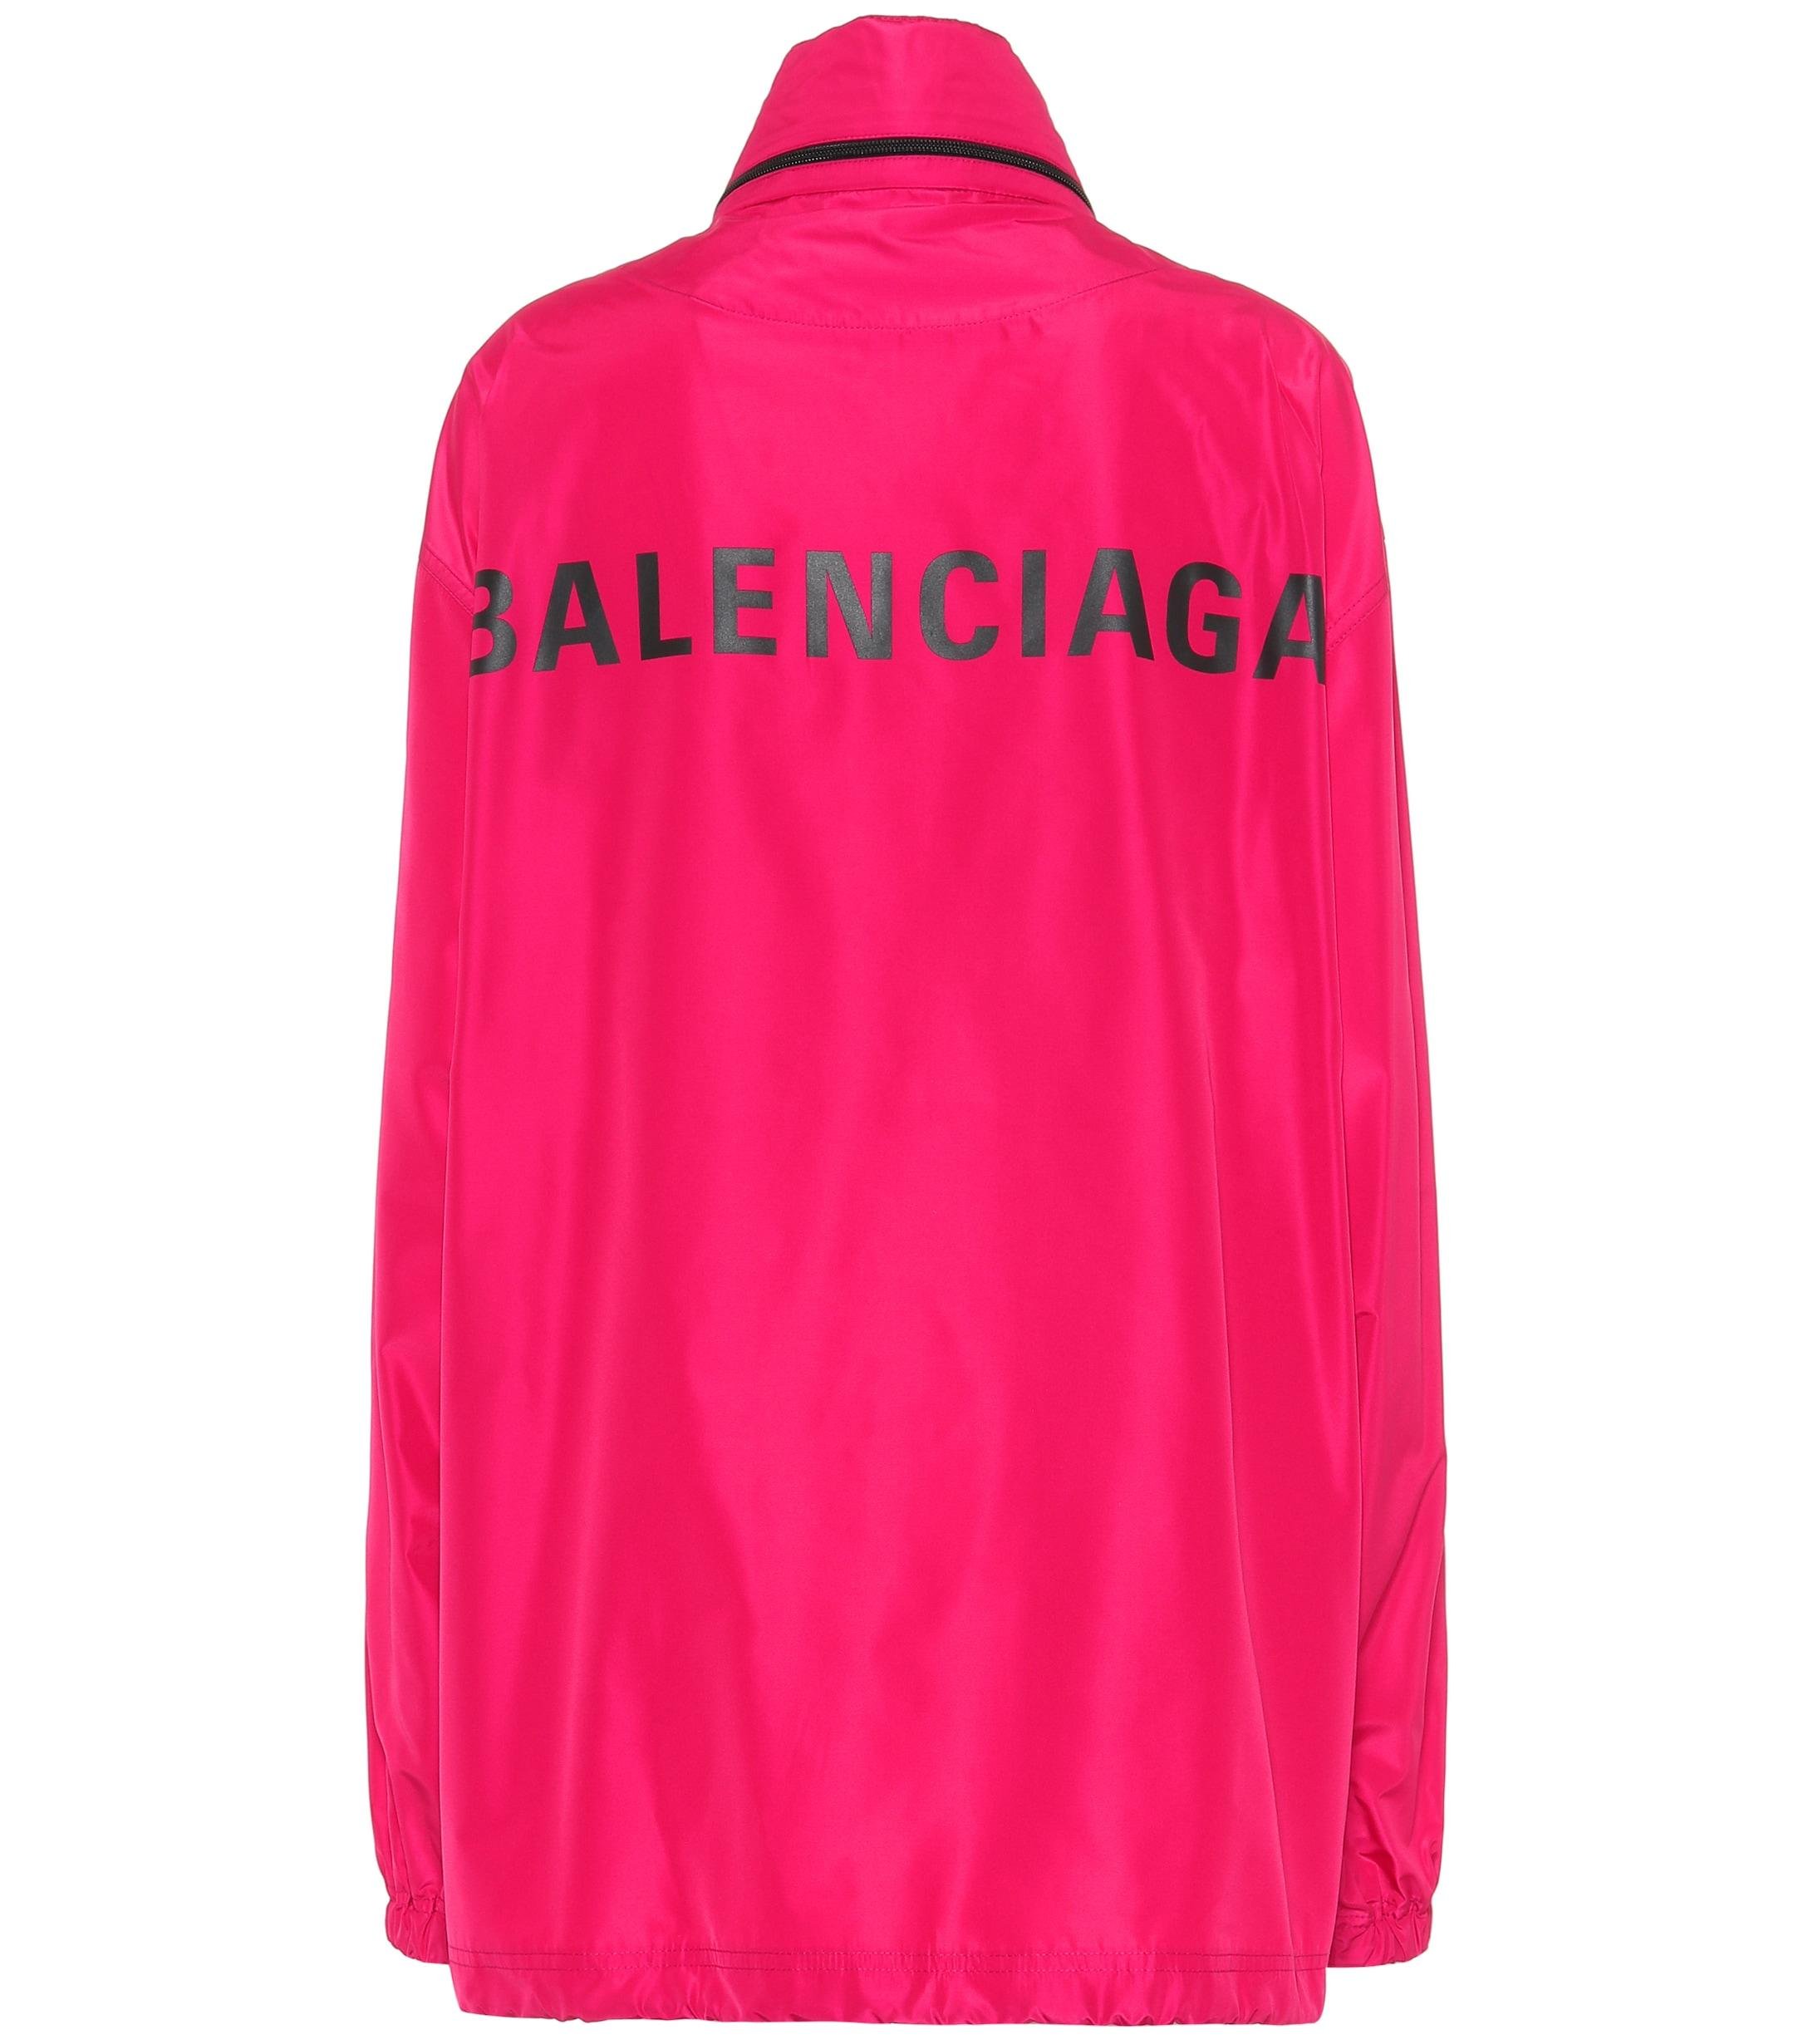 Balenciaga Logo Jacket in Pink - Lyst